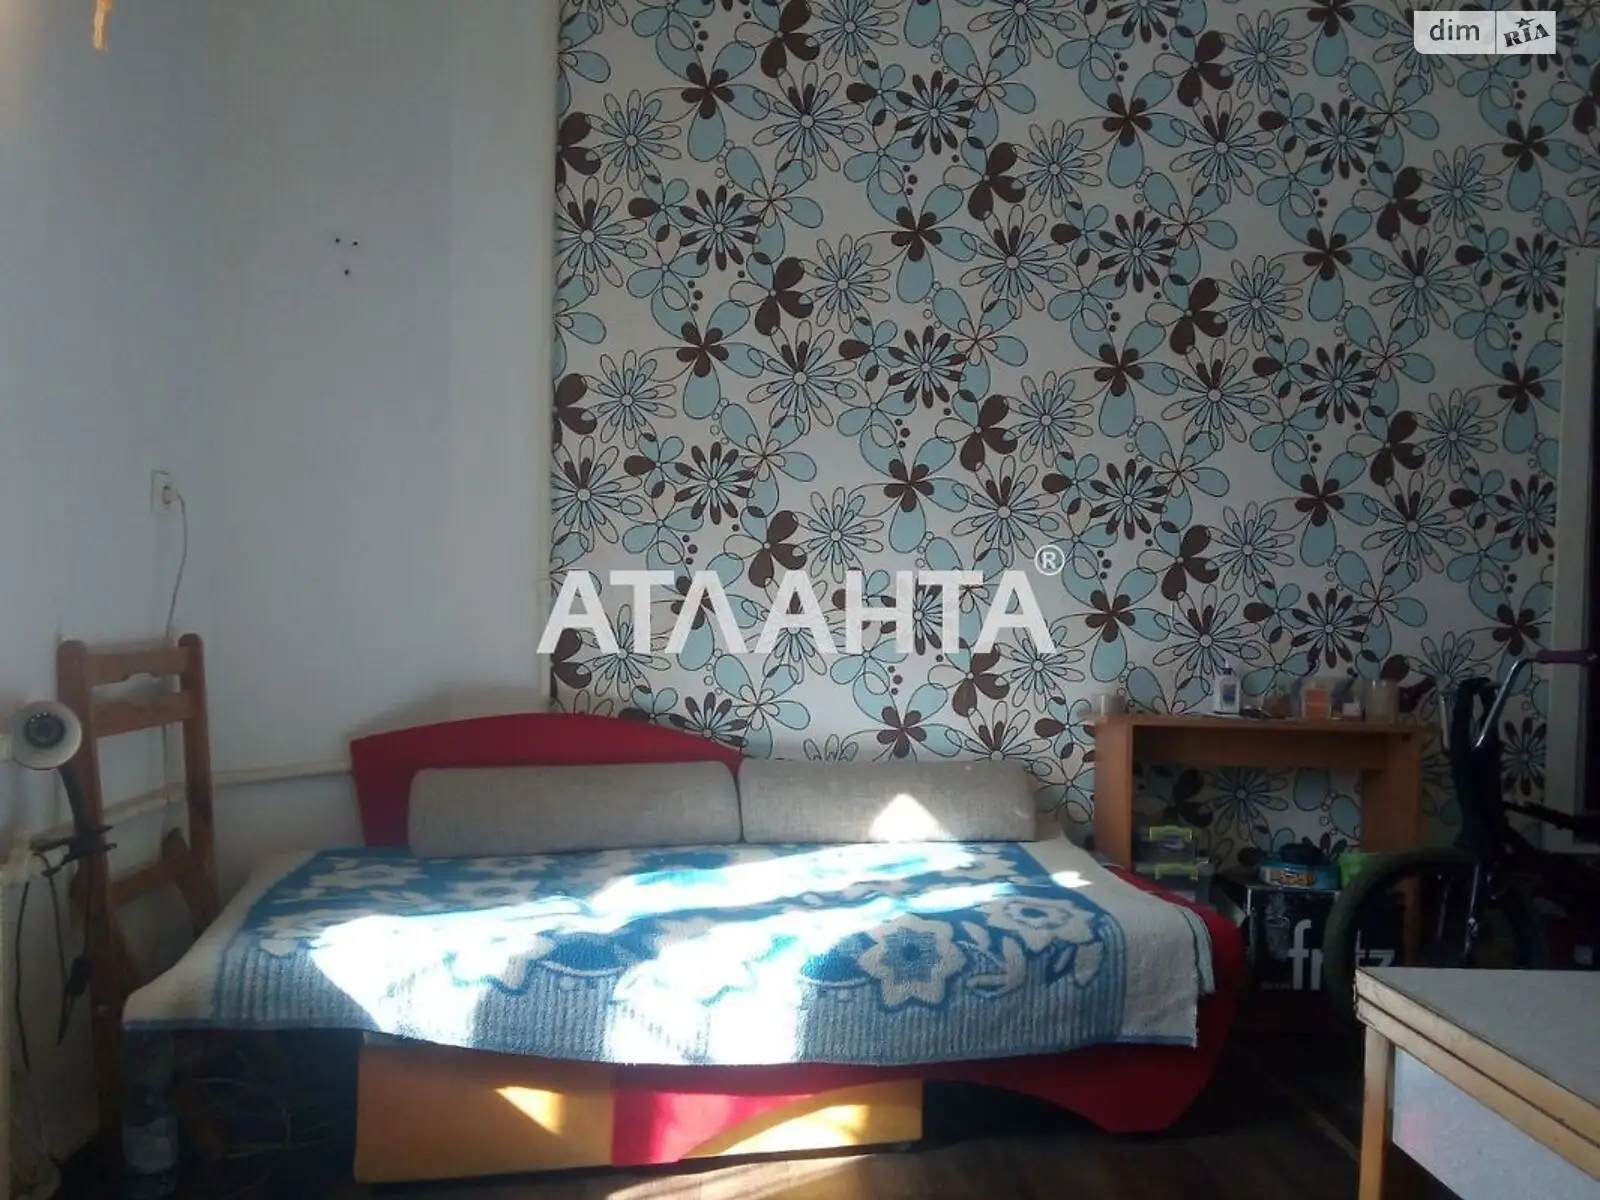 Продается комната 18.16 кв. м в Одессе, цена: 10900 $ - фото 1